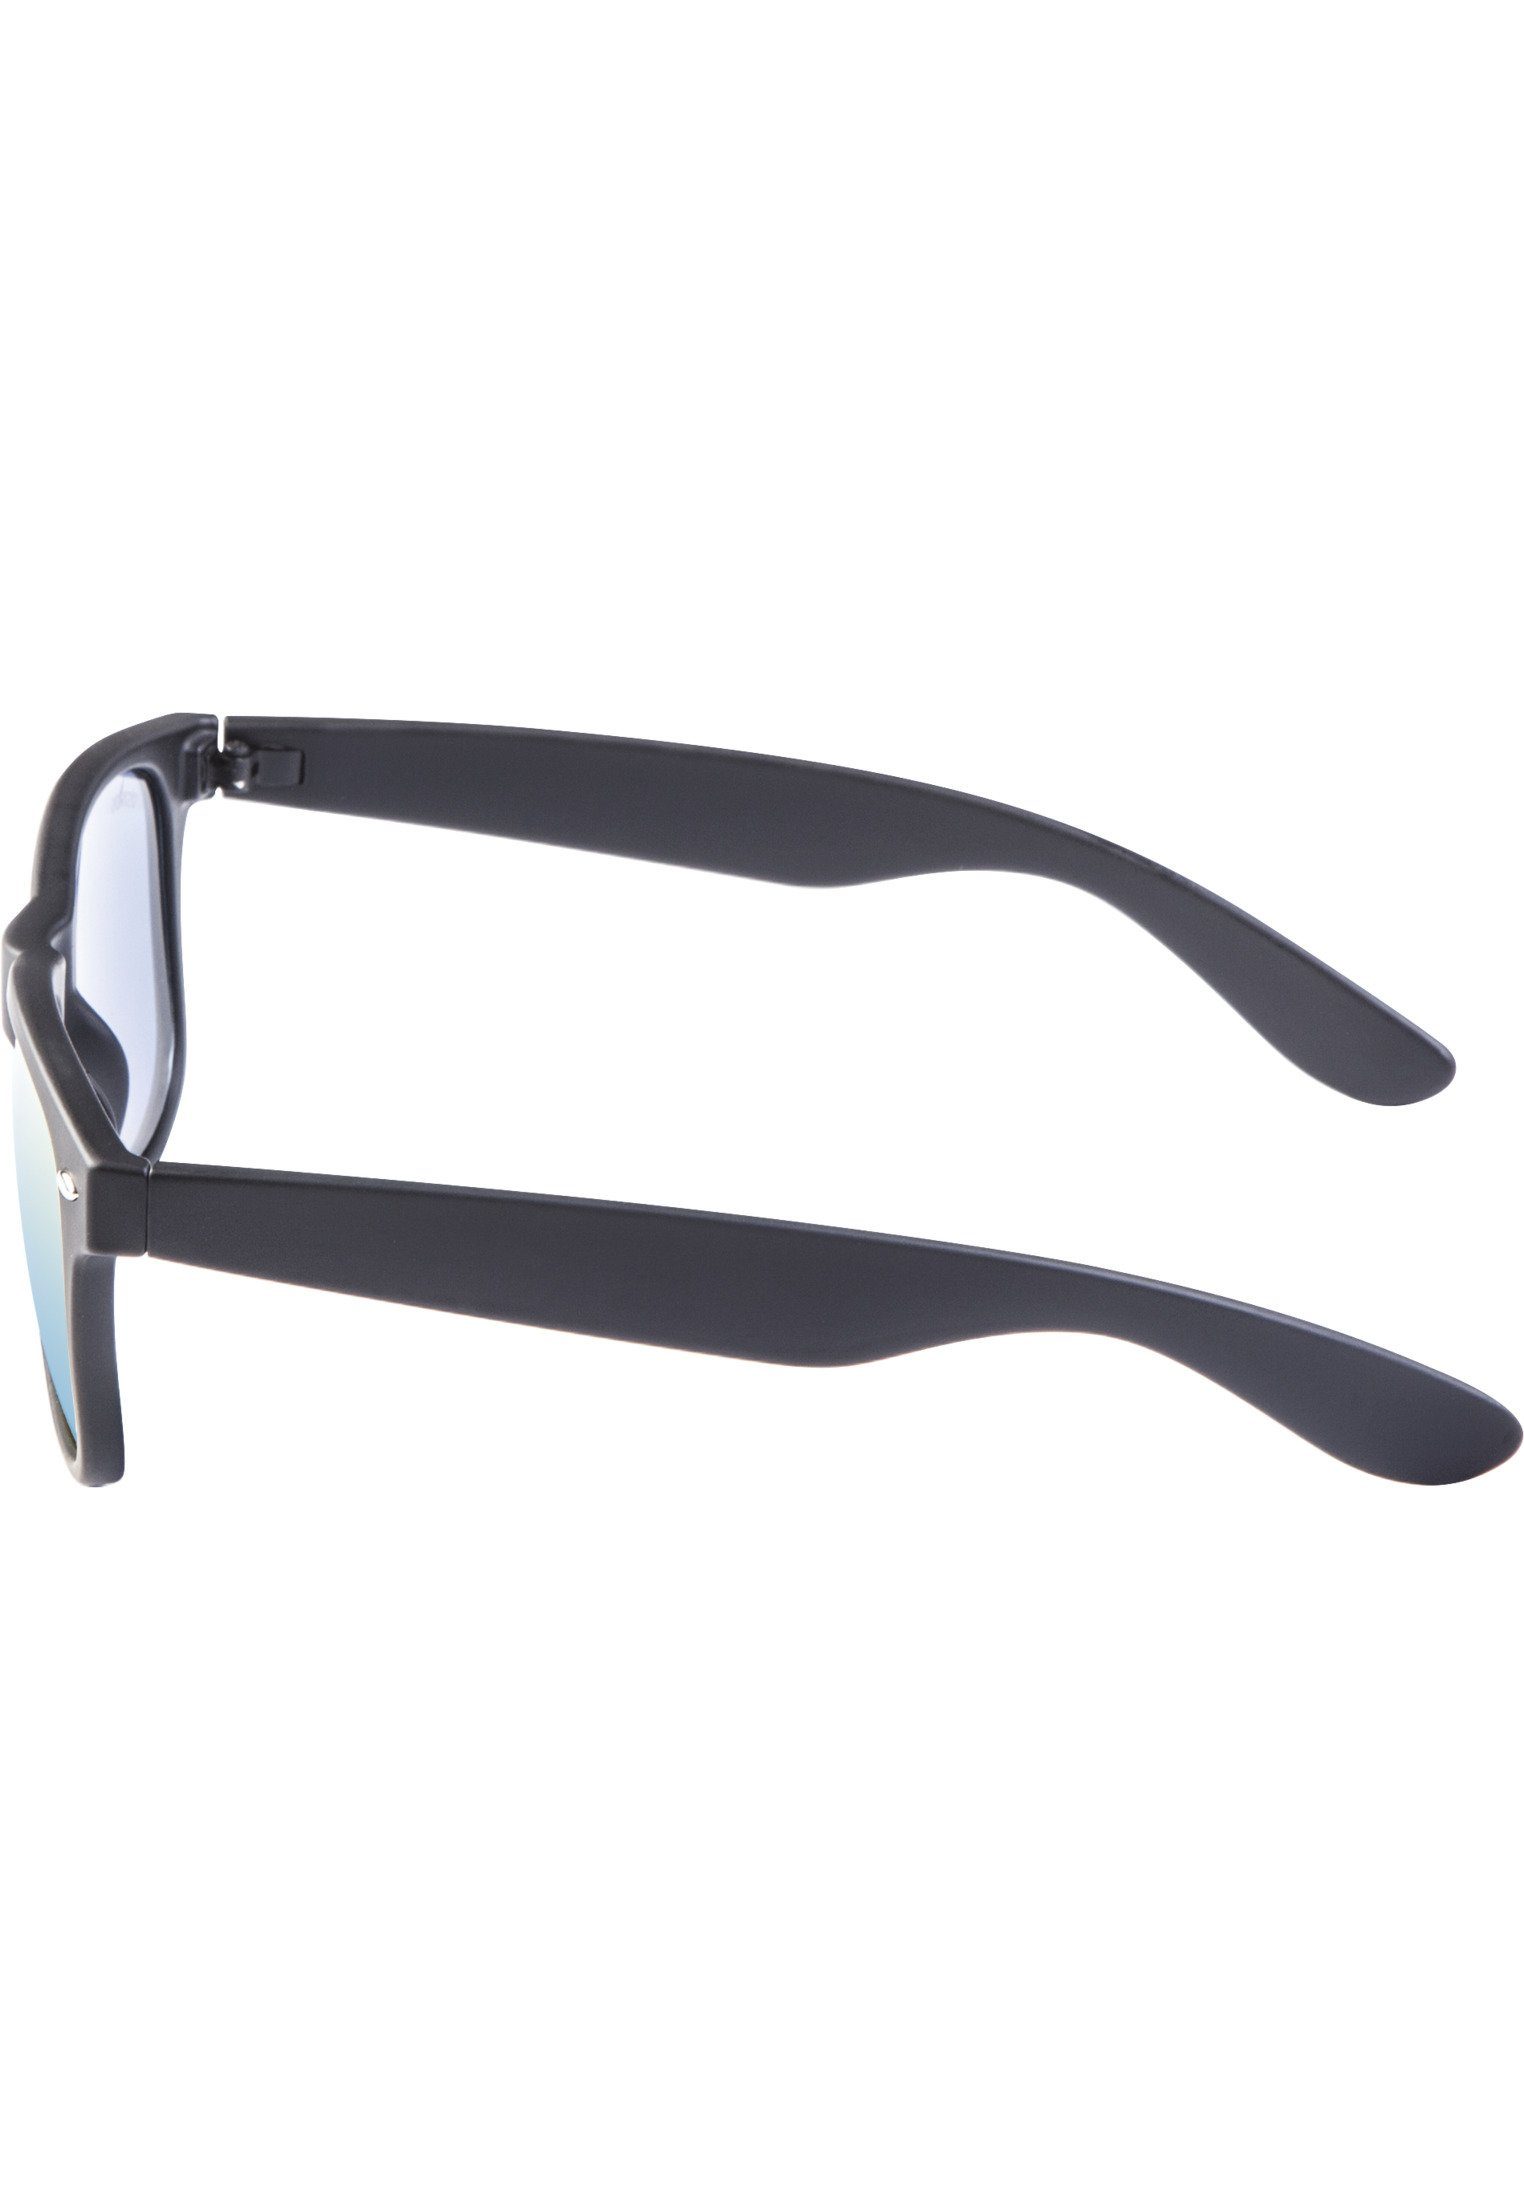 MSTRDS Sonnenbrille Youth Accessoires Sunglasses Likoma blk/blue